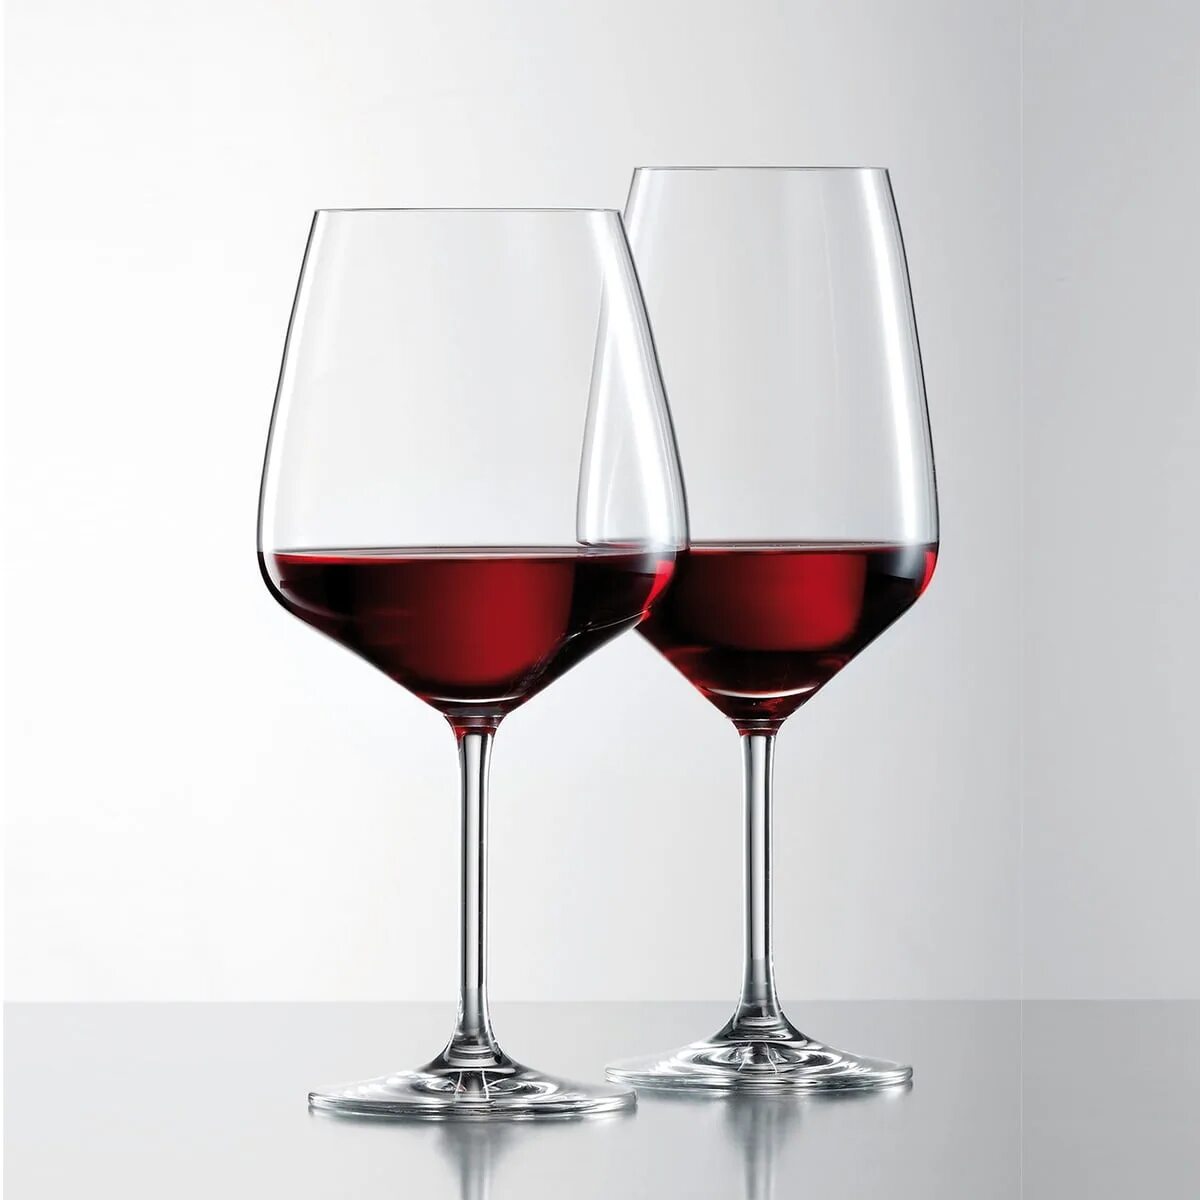 Zwiesel Glas бокалы. Schott Zwiesel бокалы для красного вина. Schott Zwiesel Tritan бокалы для вина. Бокал бордо и Бургундия. Бокал для вина в москве